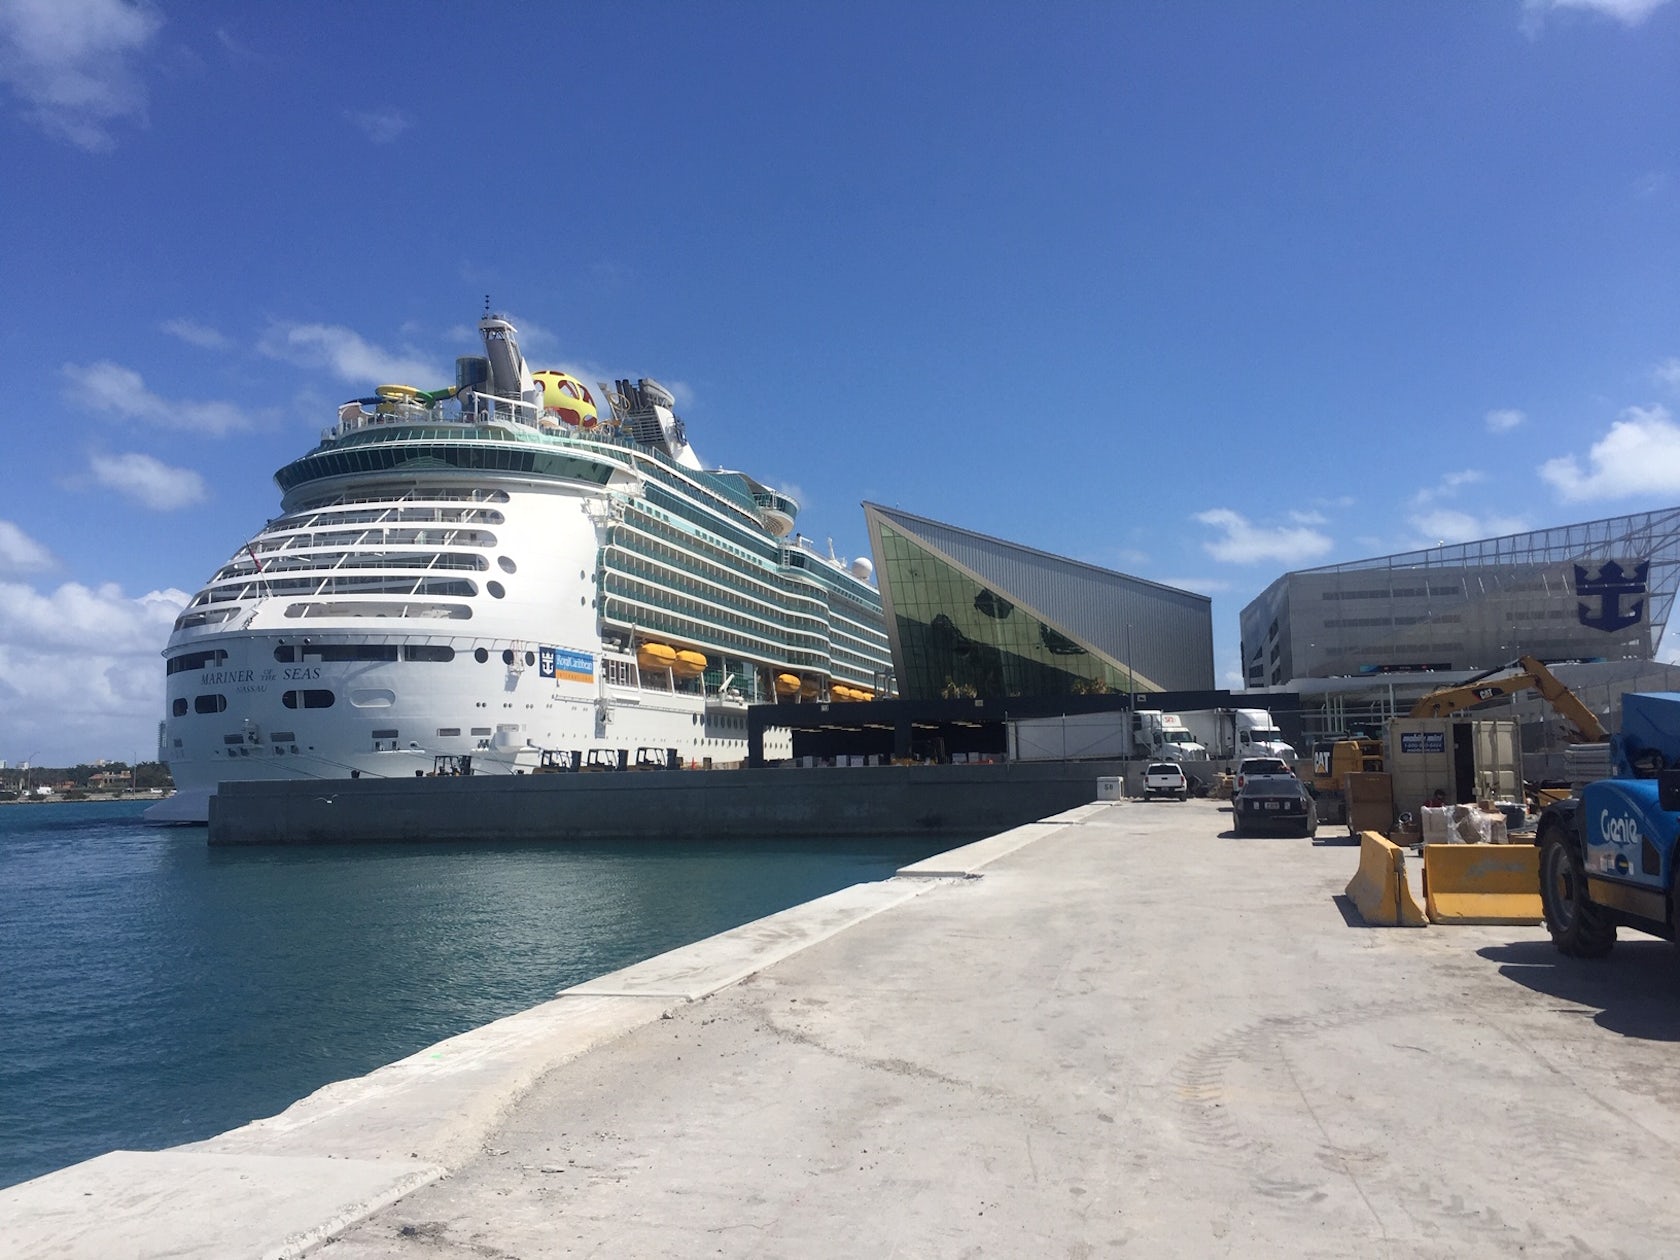 miami cruise port royal caribbean terminal